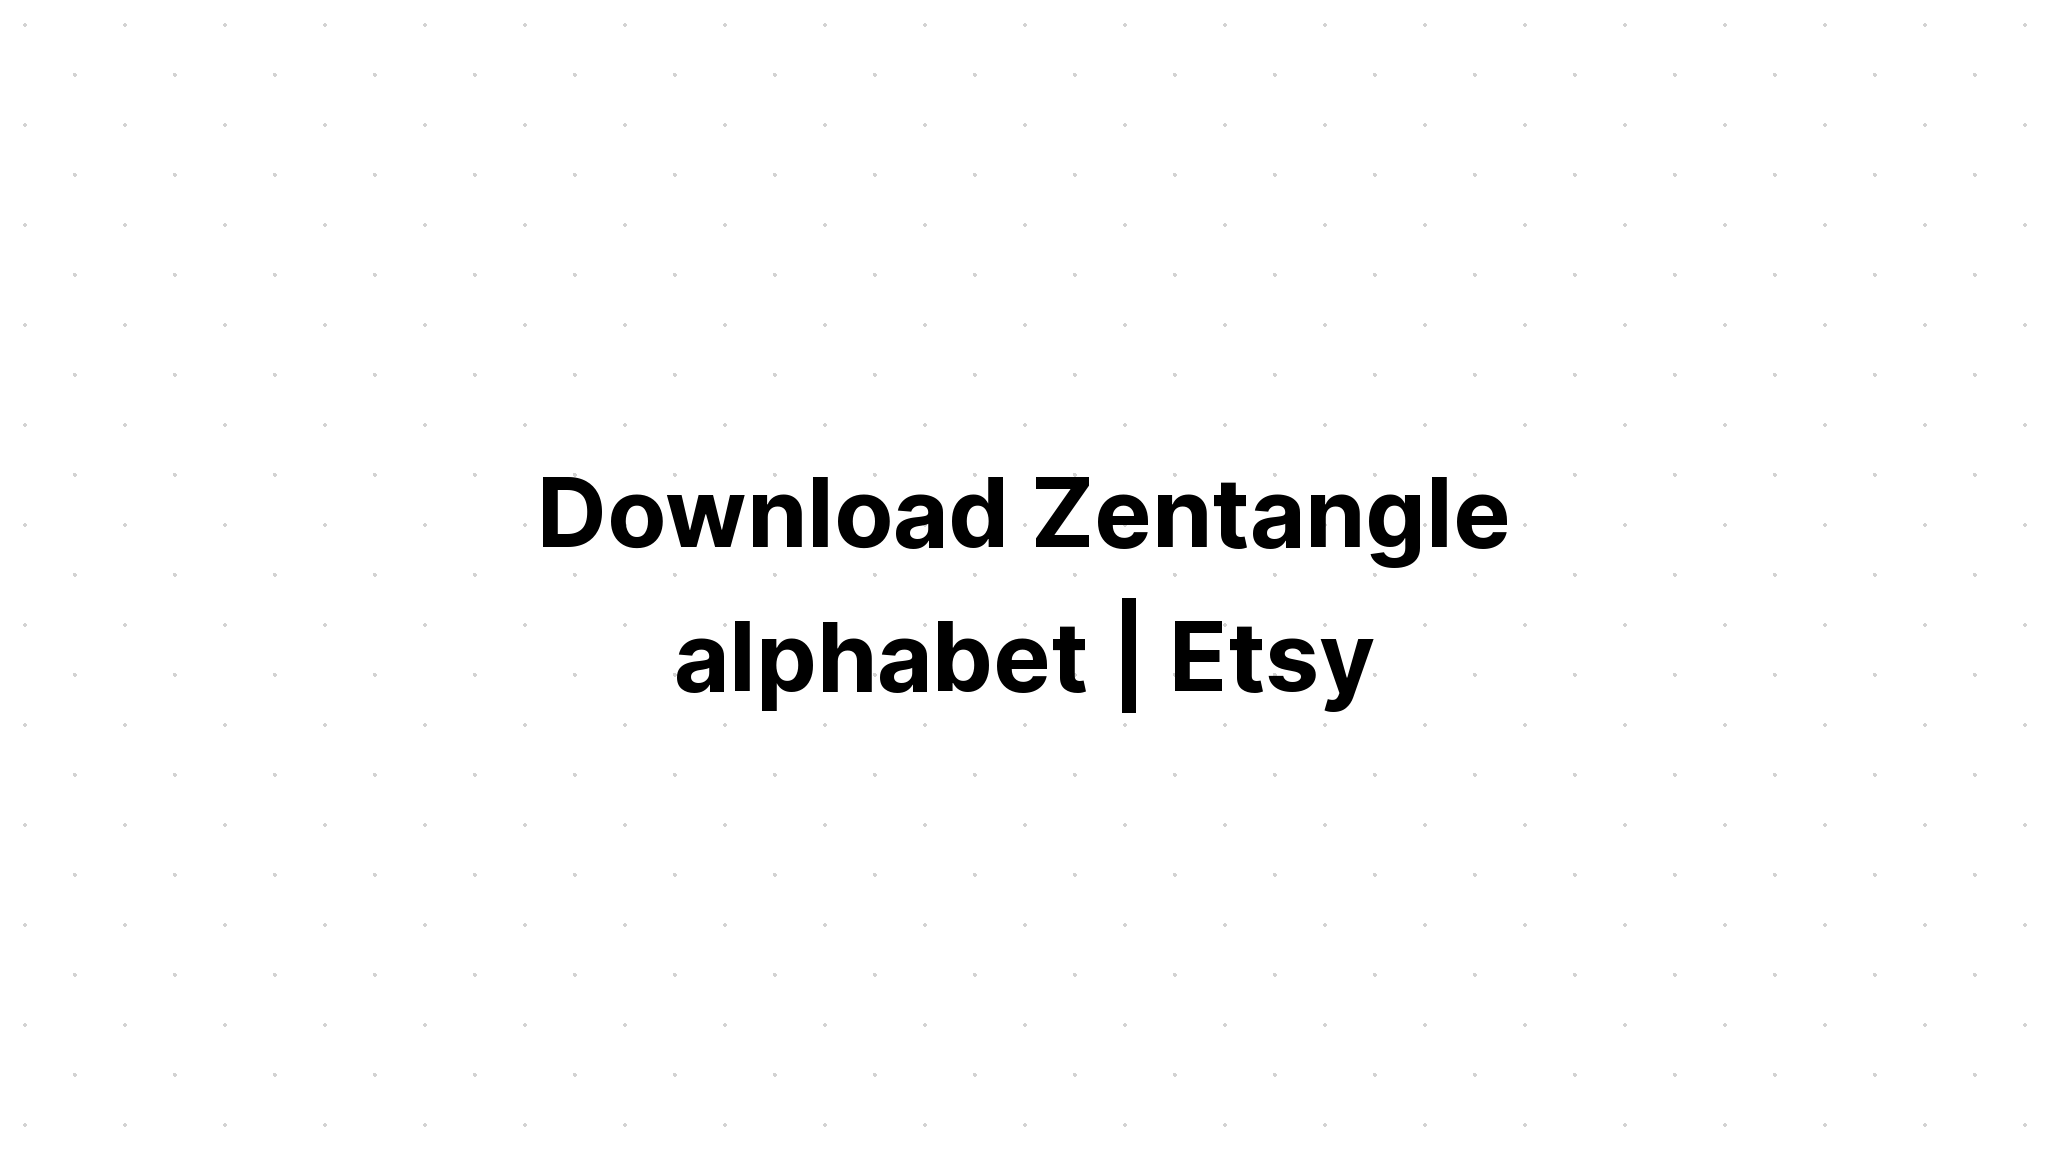 Download Alphabet Mandala Svg Free Printable - SVG Layered